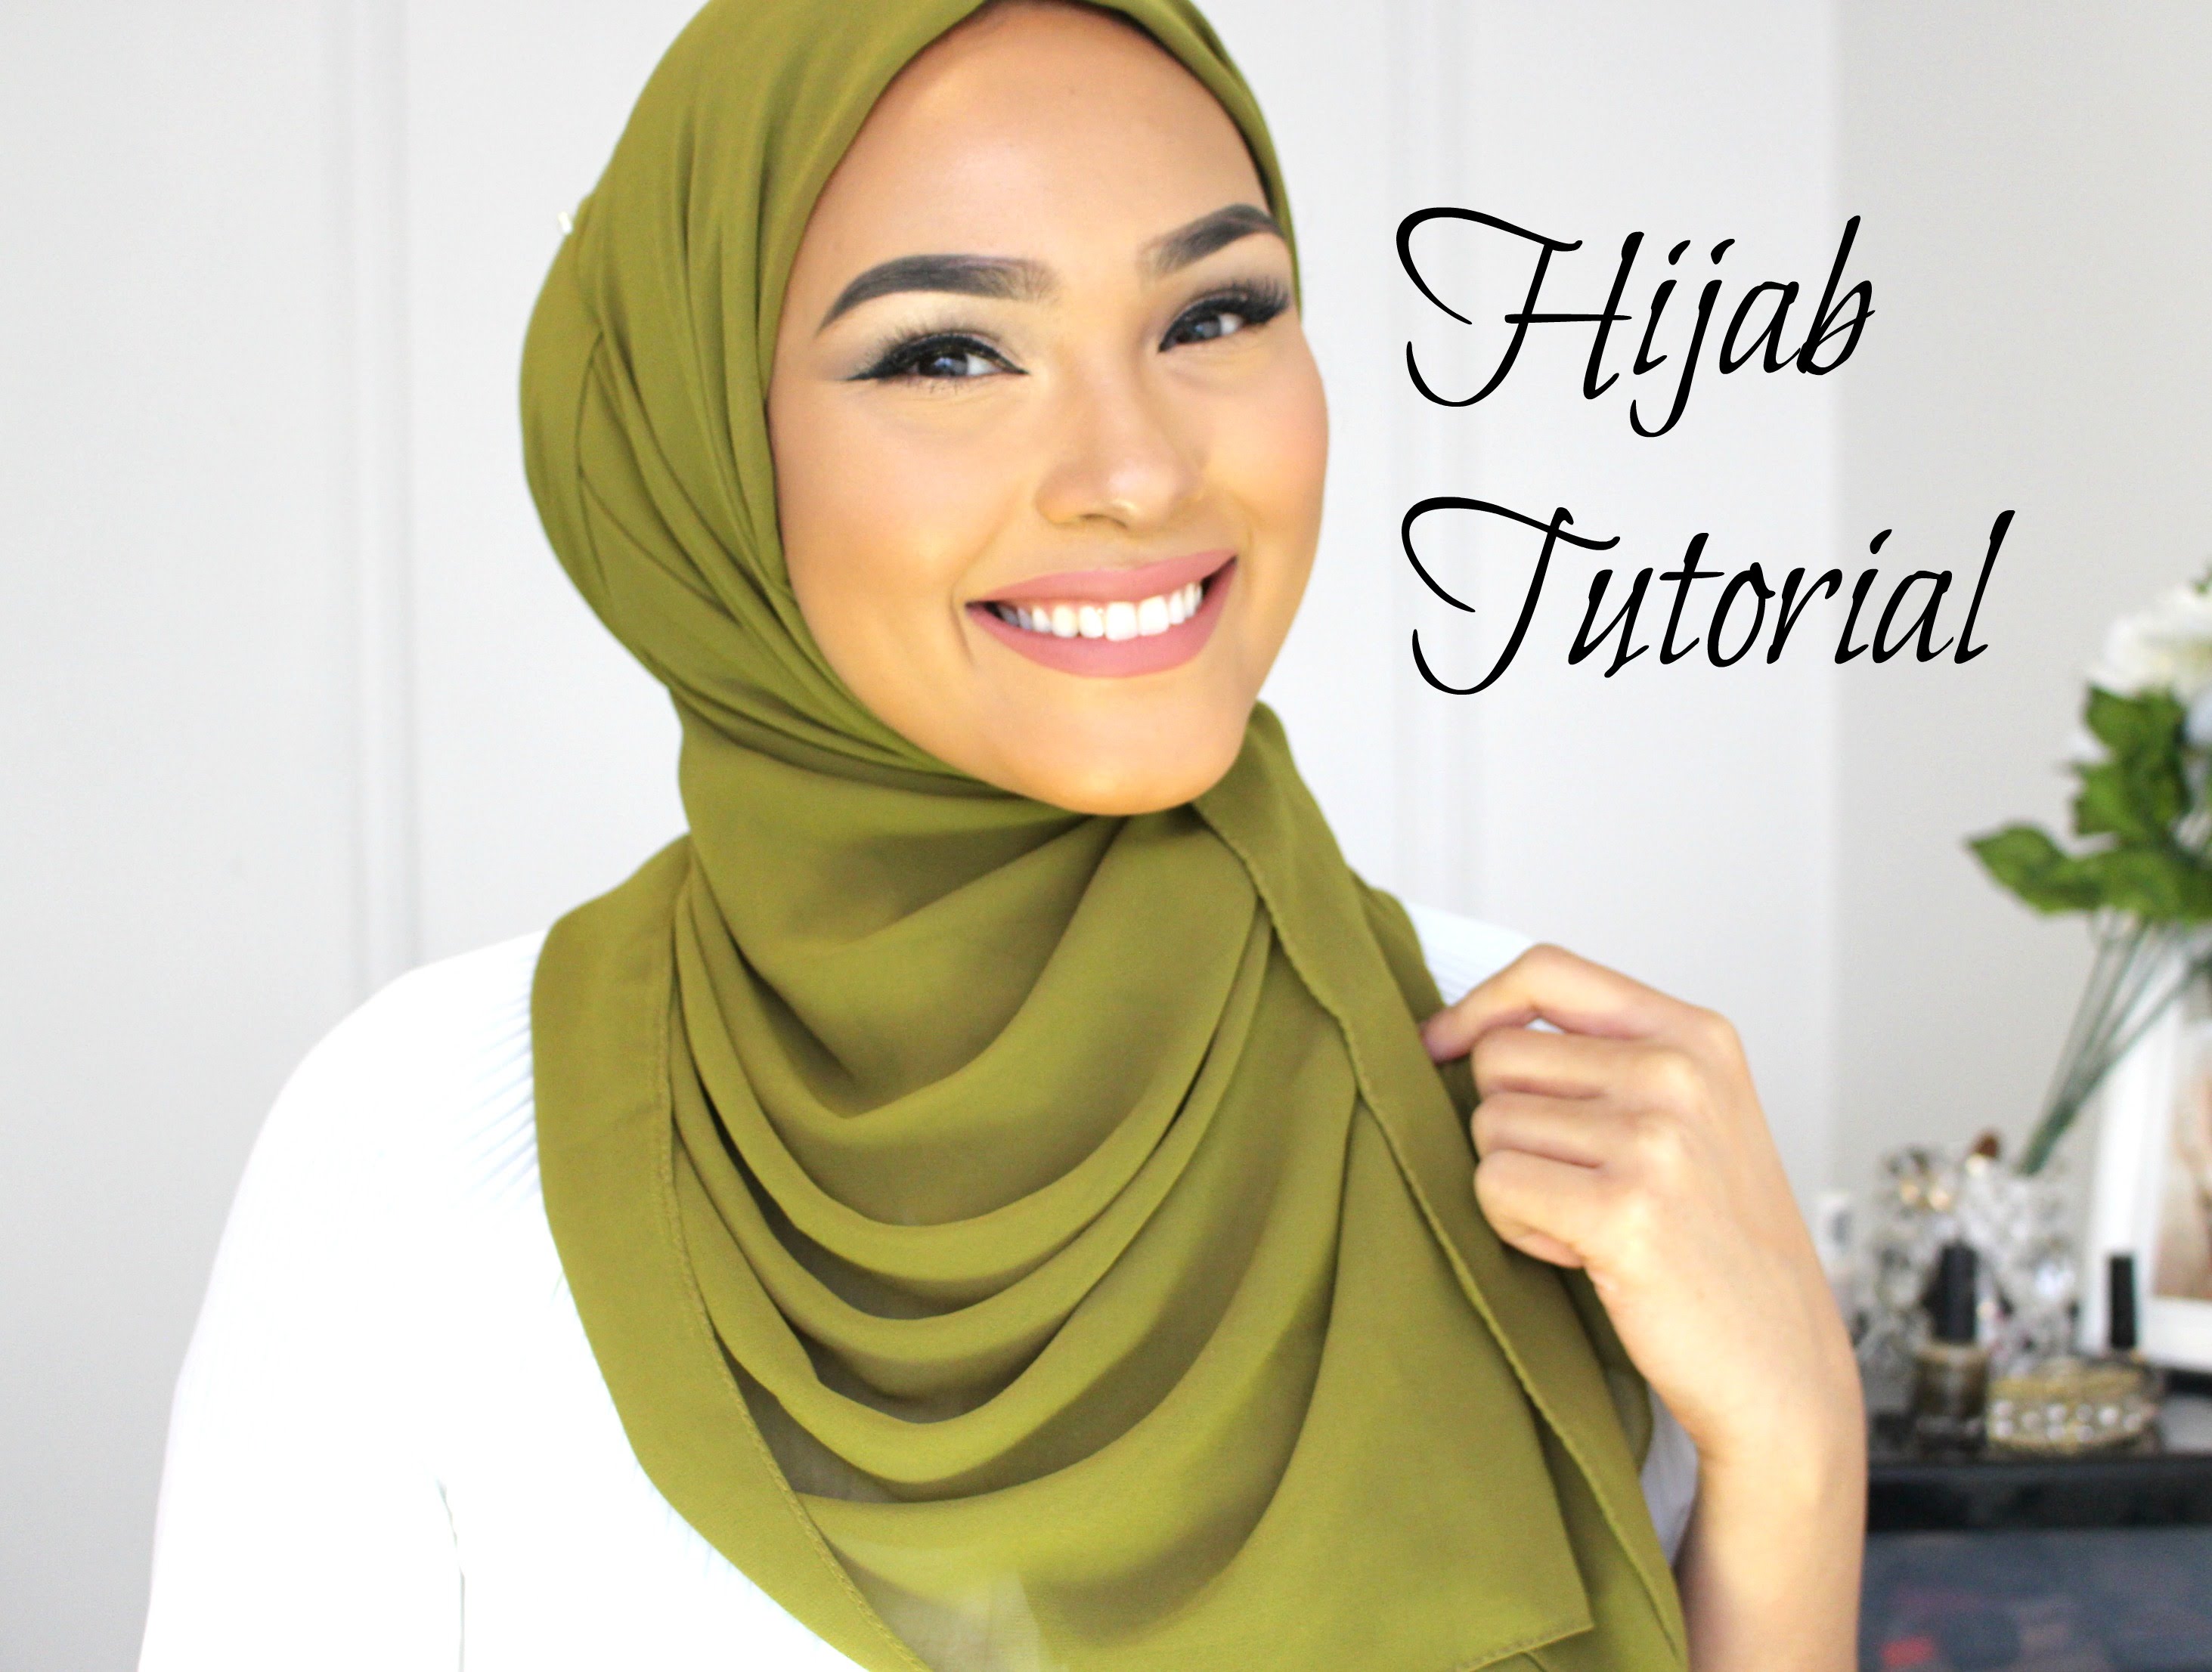 Hijab Tutorials Archives - Page 19 of 24 - Hijab Fashion Inspiration